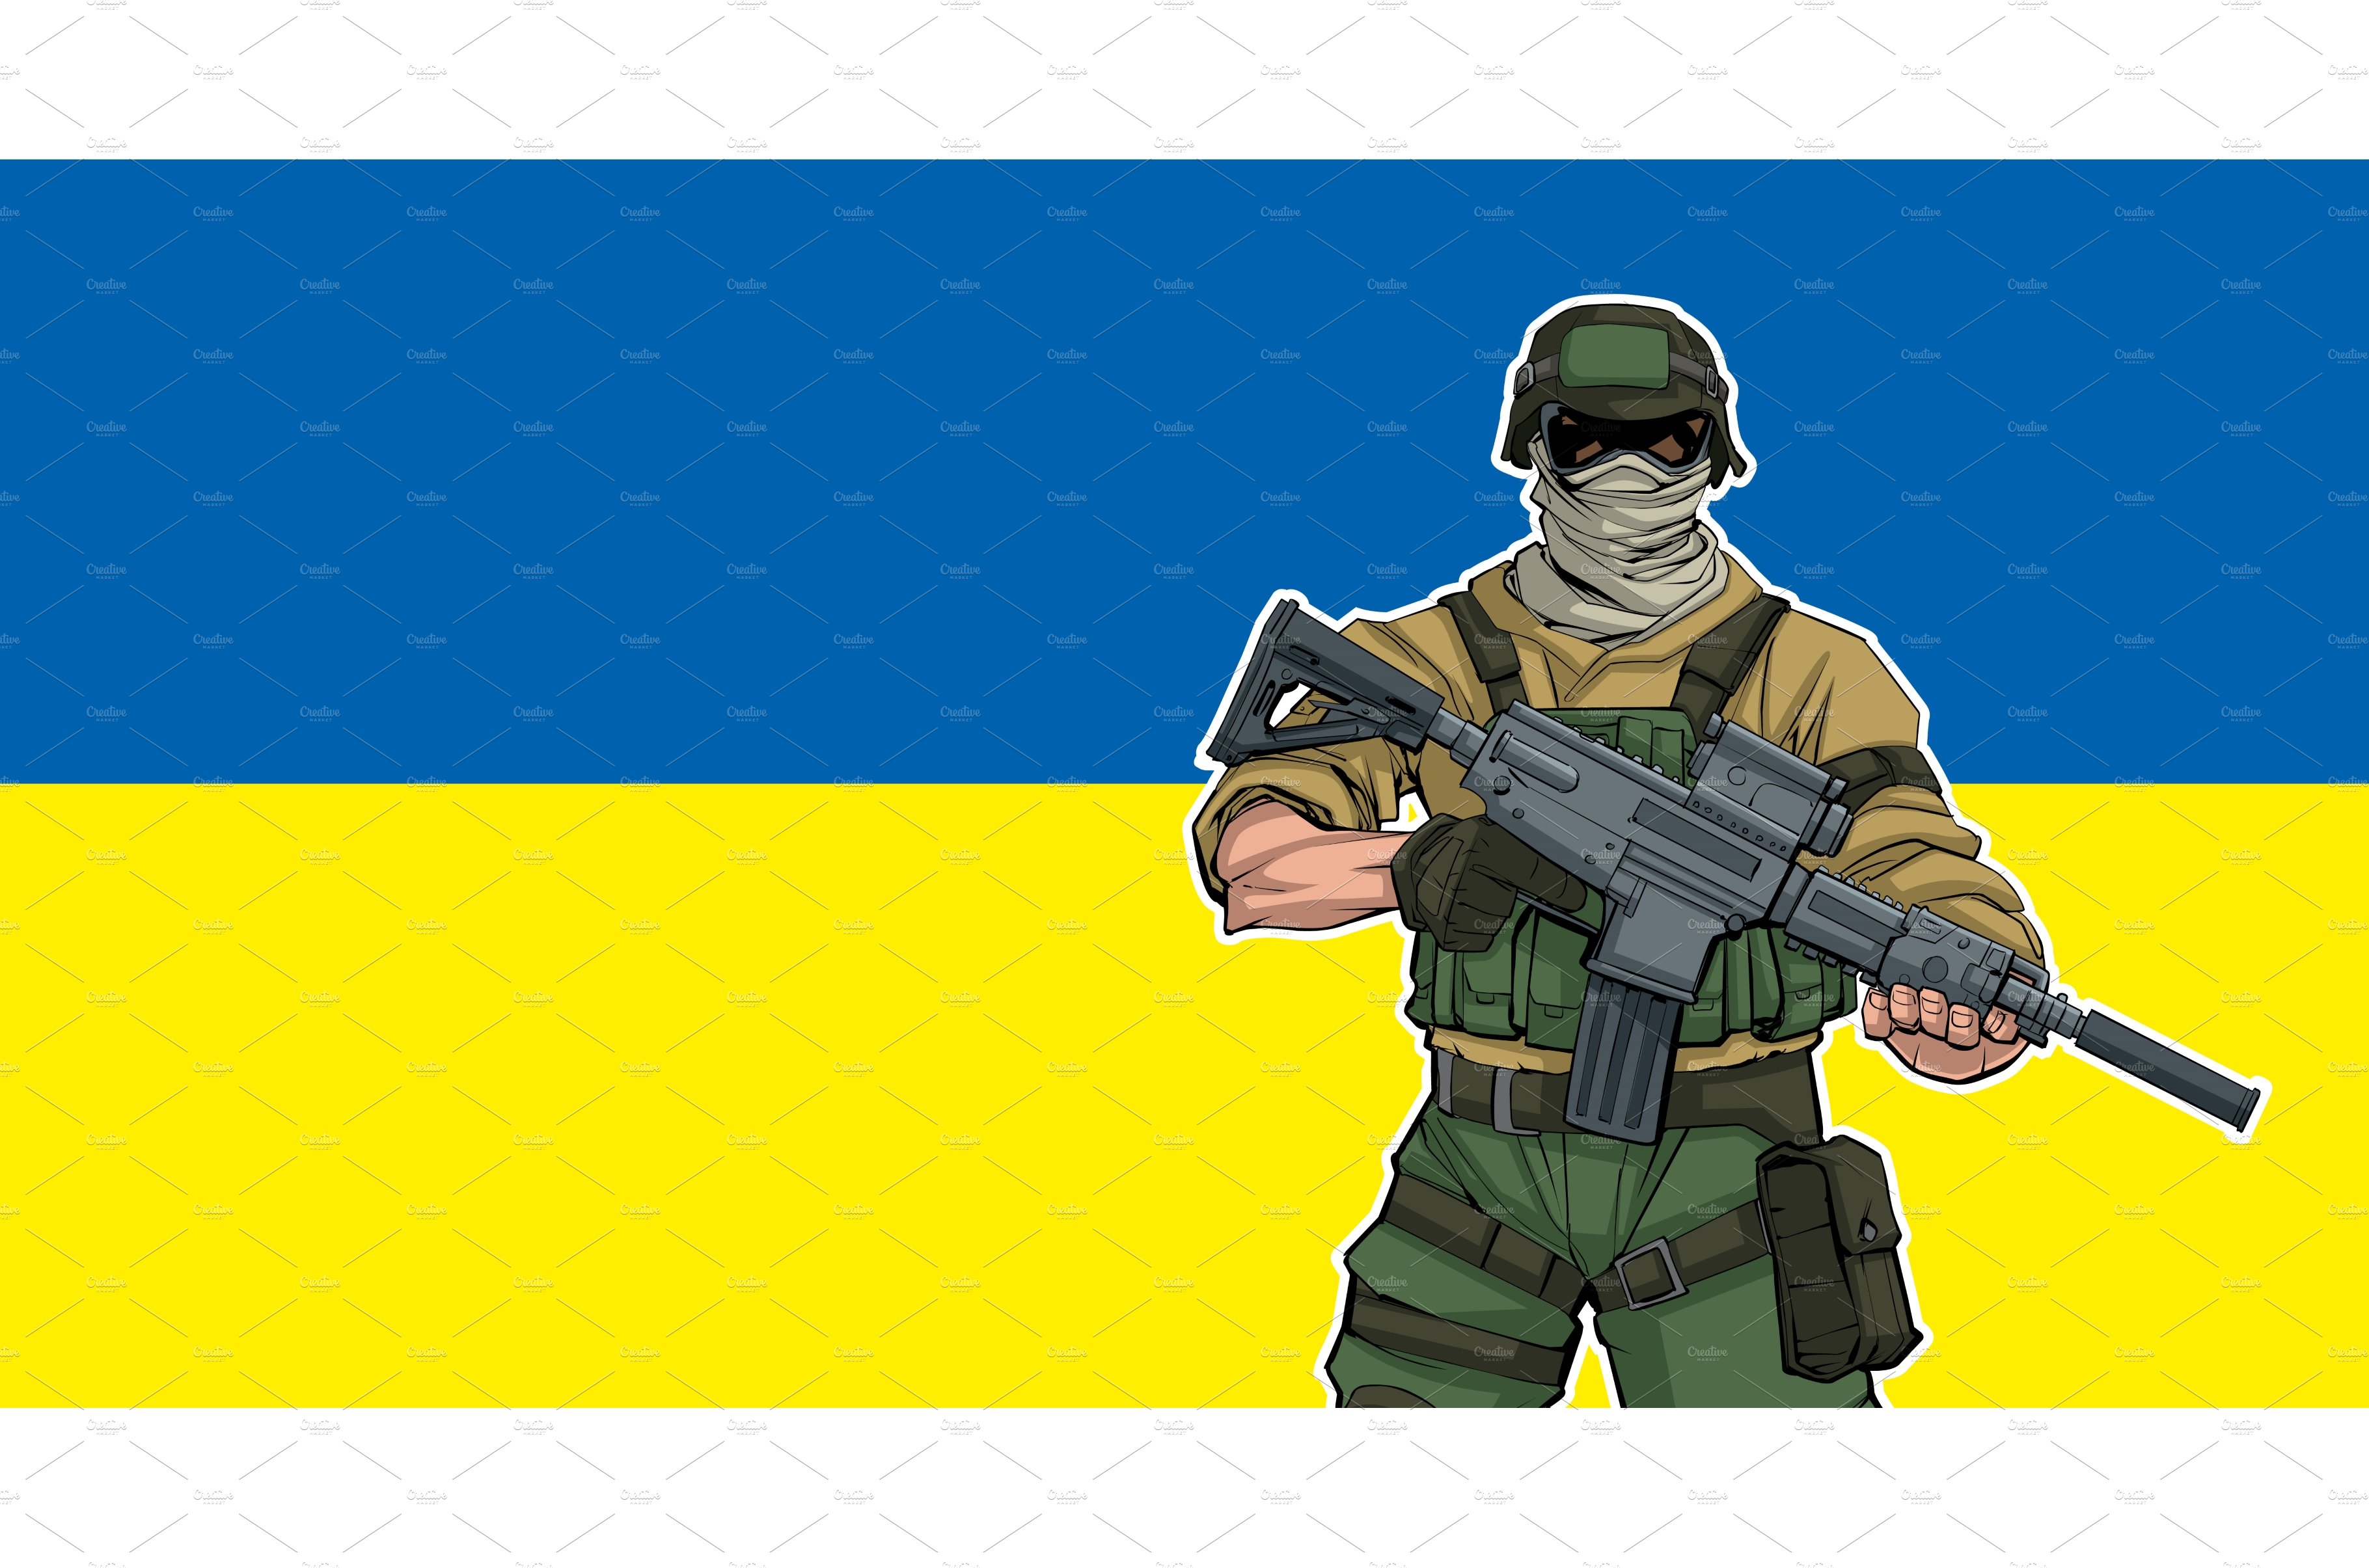 Ukrainian Soldier Background cover image.